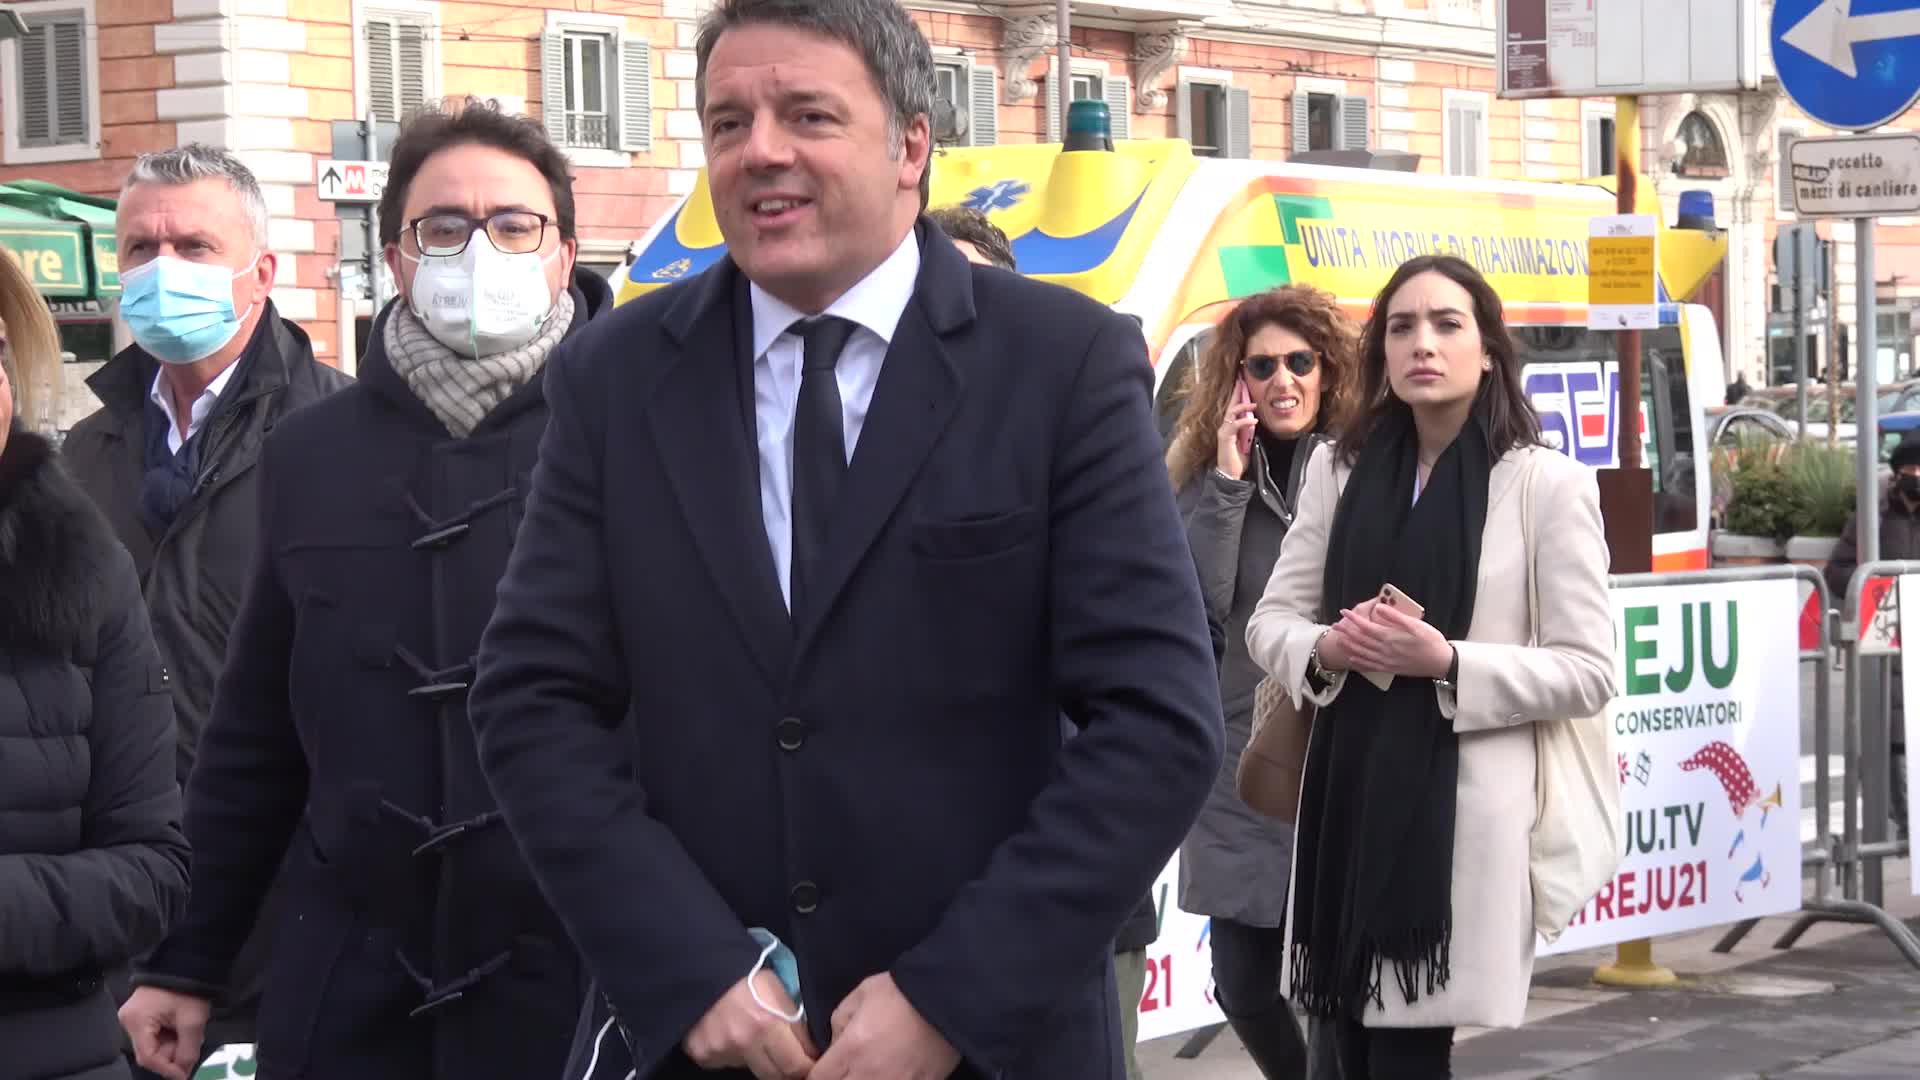 Atreju, platea gremita e per strada urlano: "Camerata Renzi"